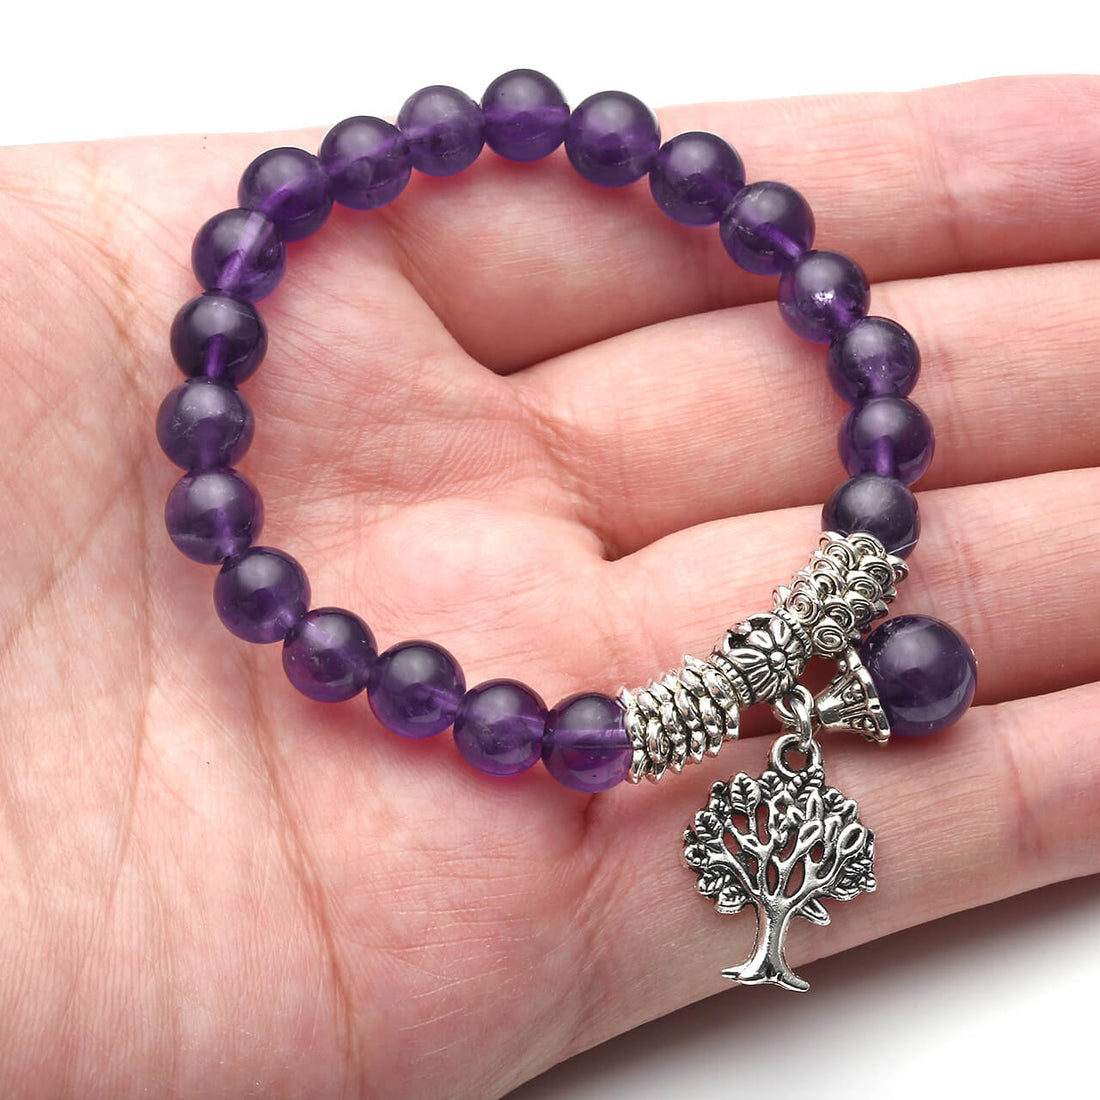 Natural Amethyst healing quartz bracelet balancing tree of life charm bracelet 